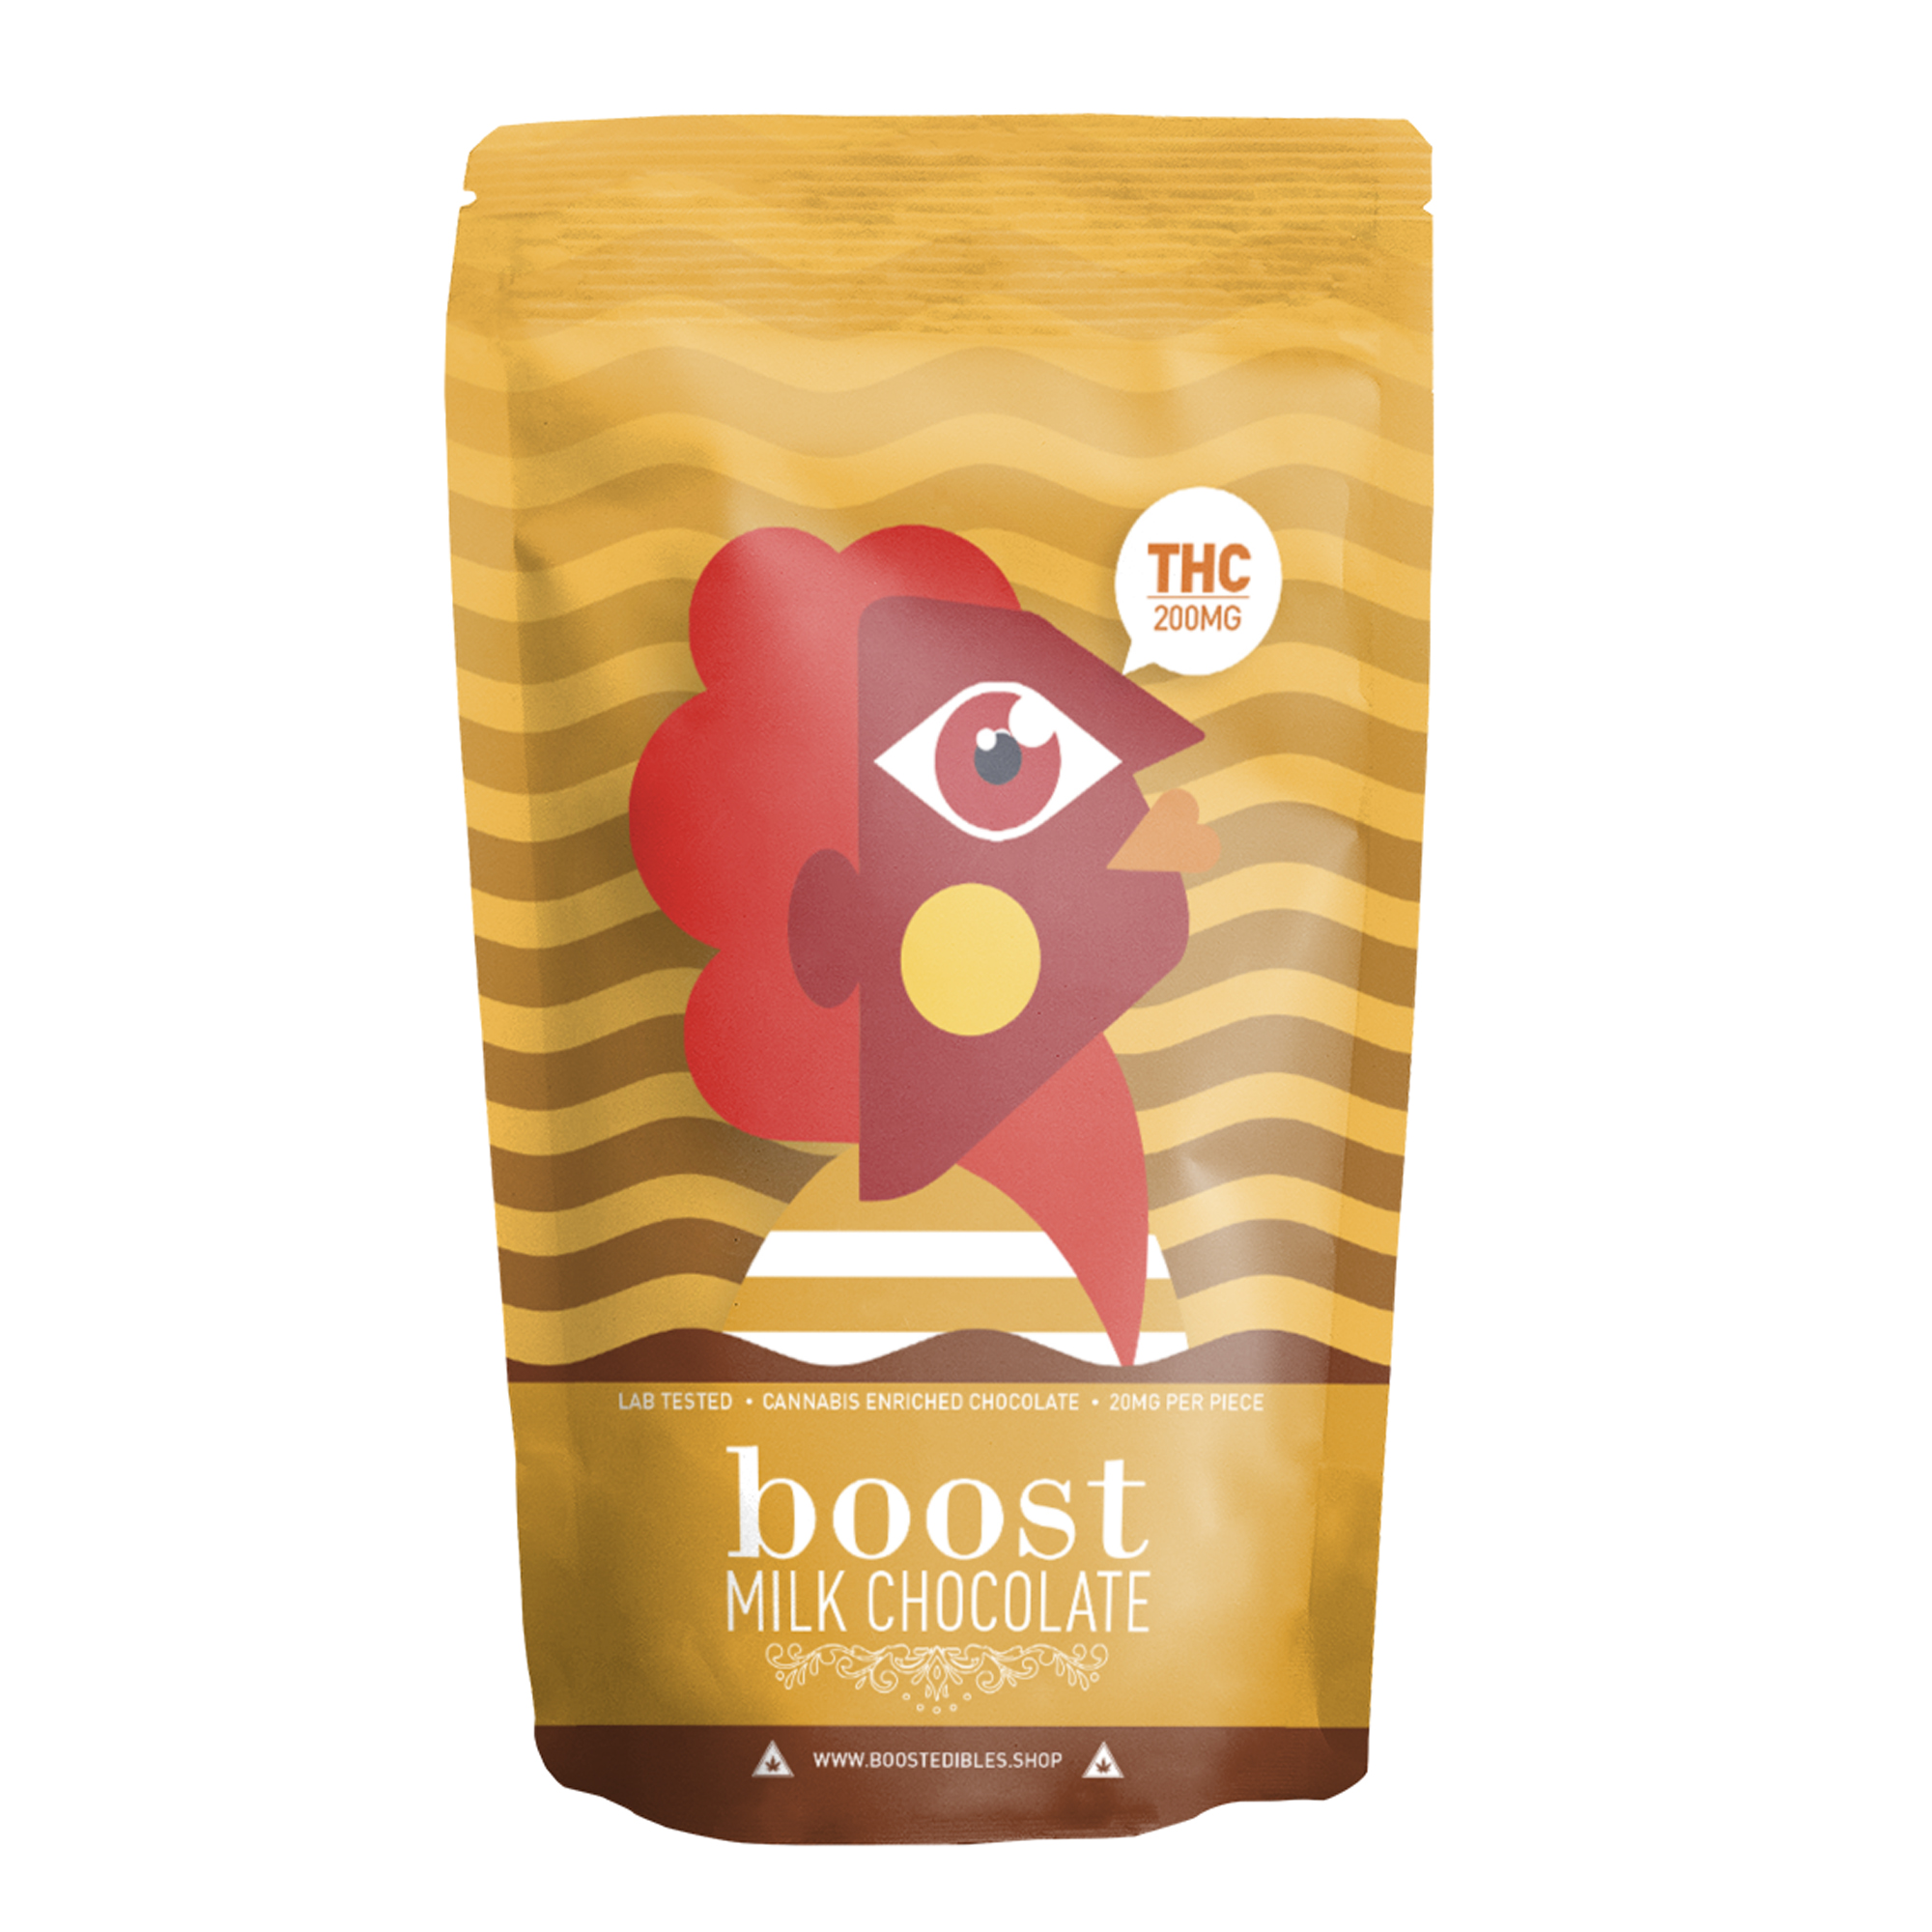 Boost Milk Chocolate Pack - THC 200mg